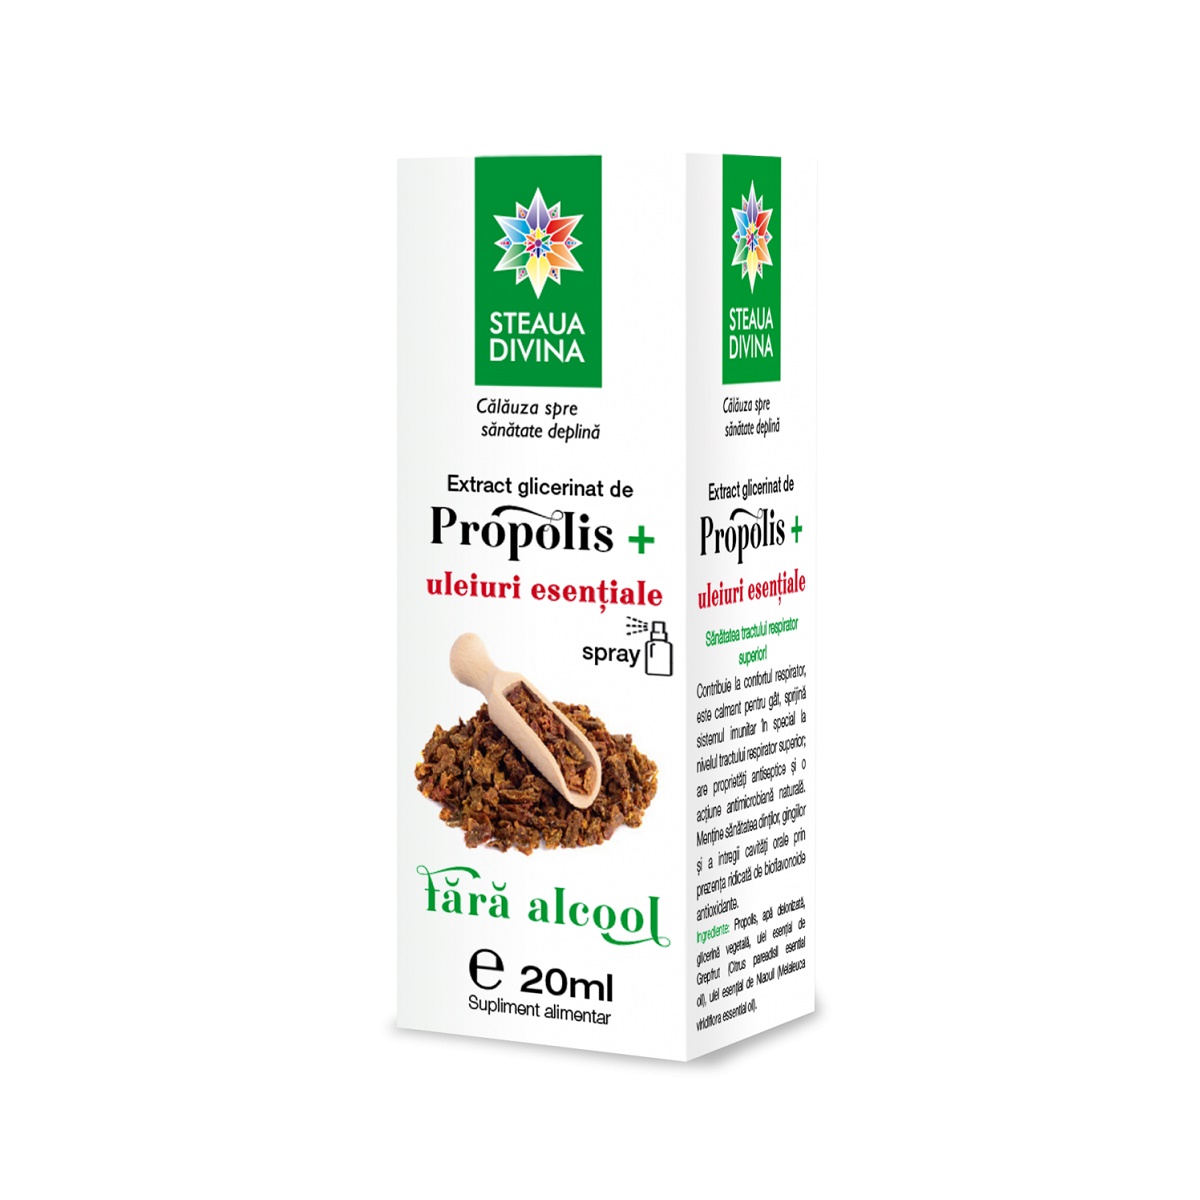 Extract glicerinat de propolis cu uleiuri esentiale, 20 ml, Steaua Divina